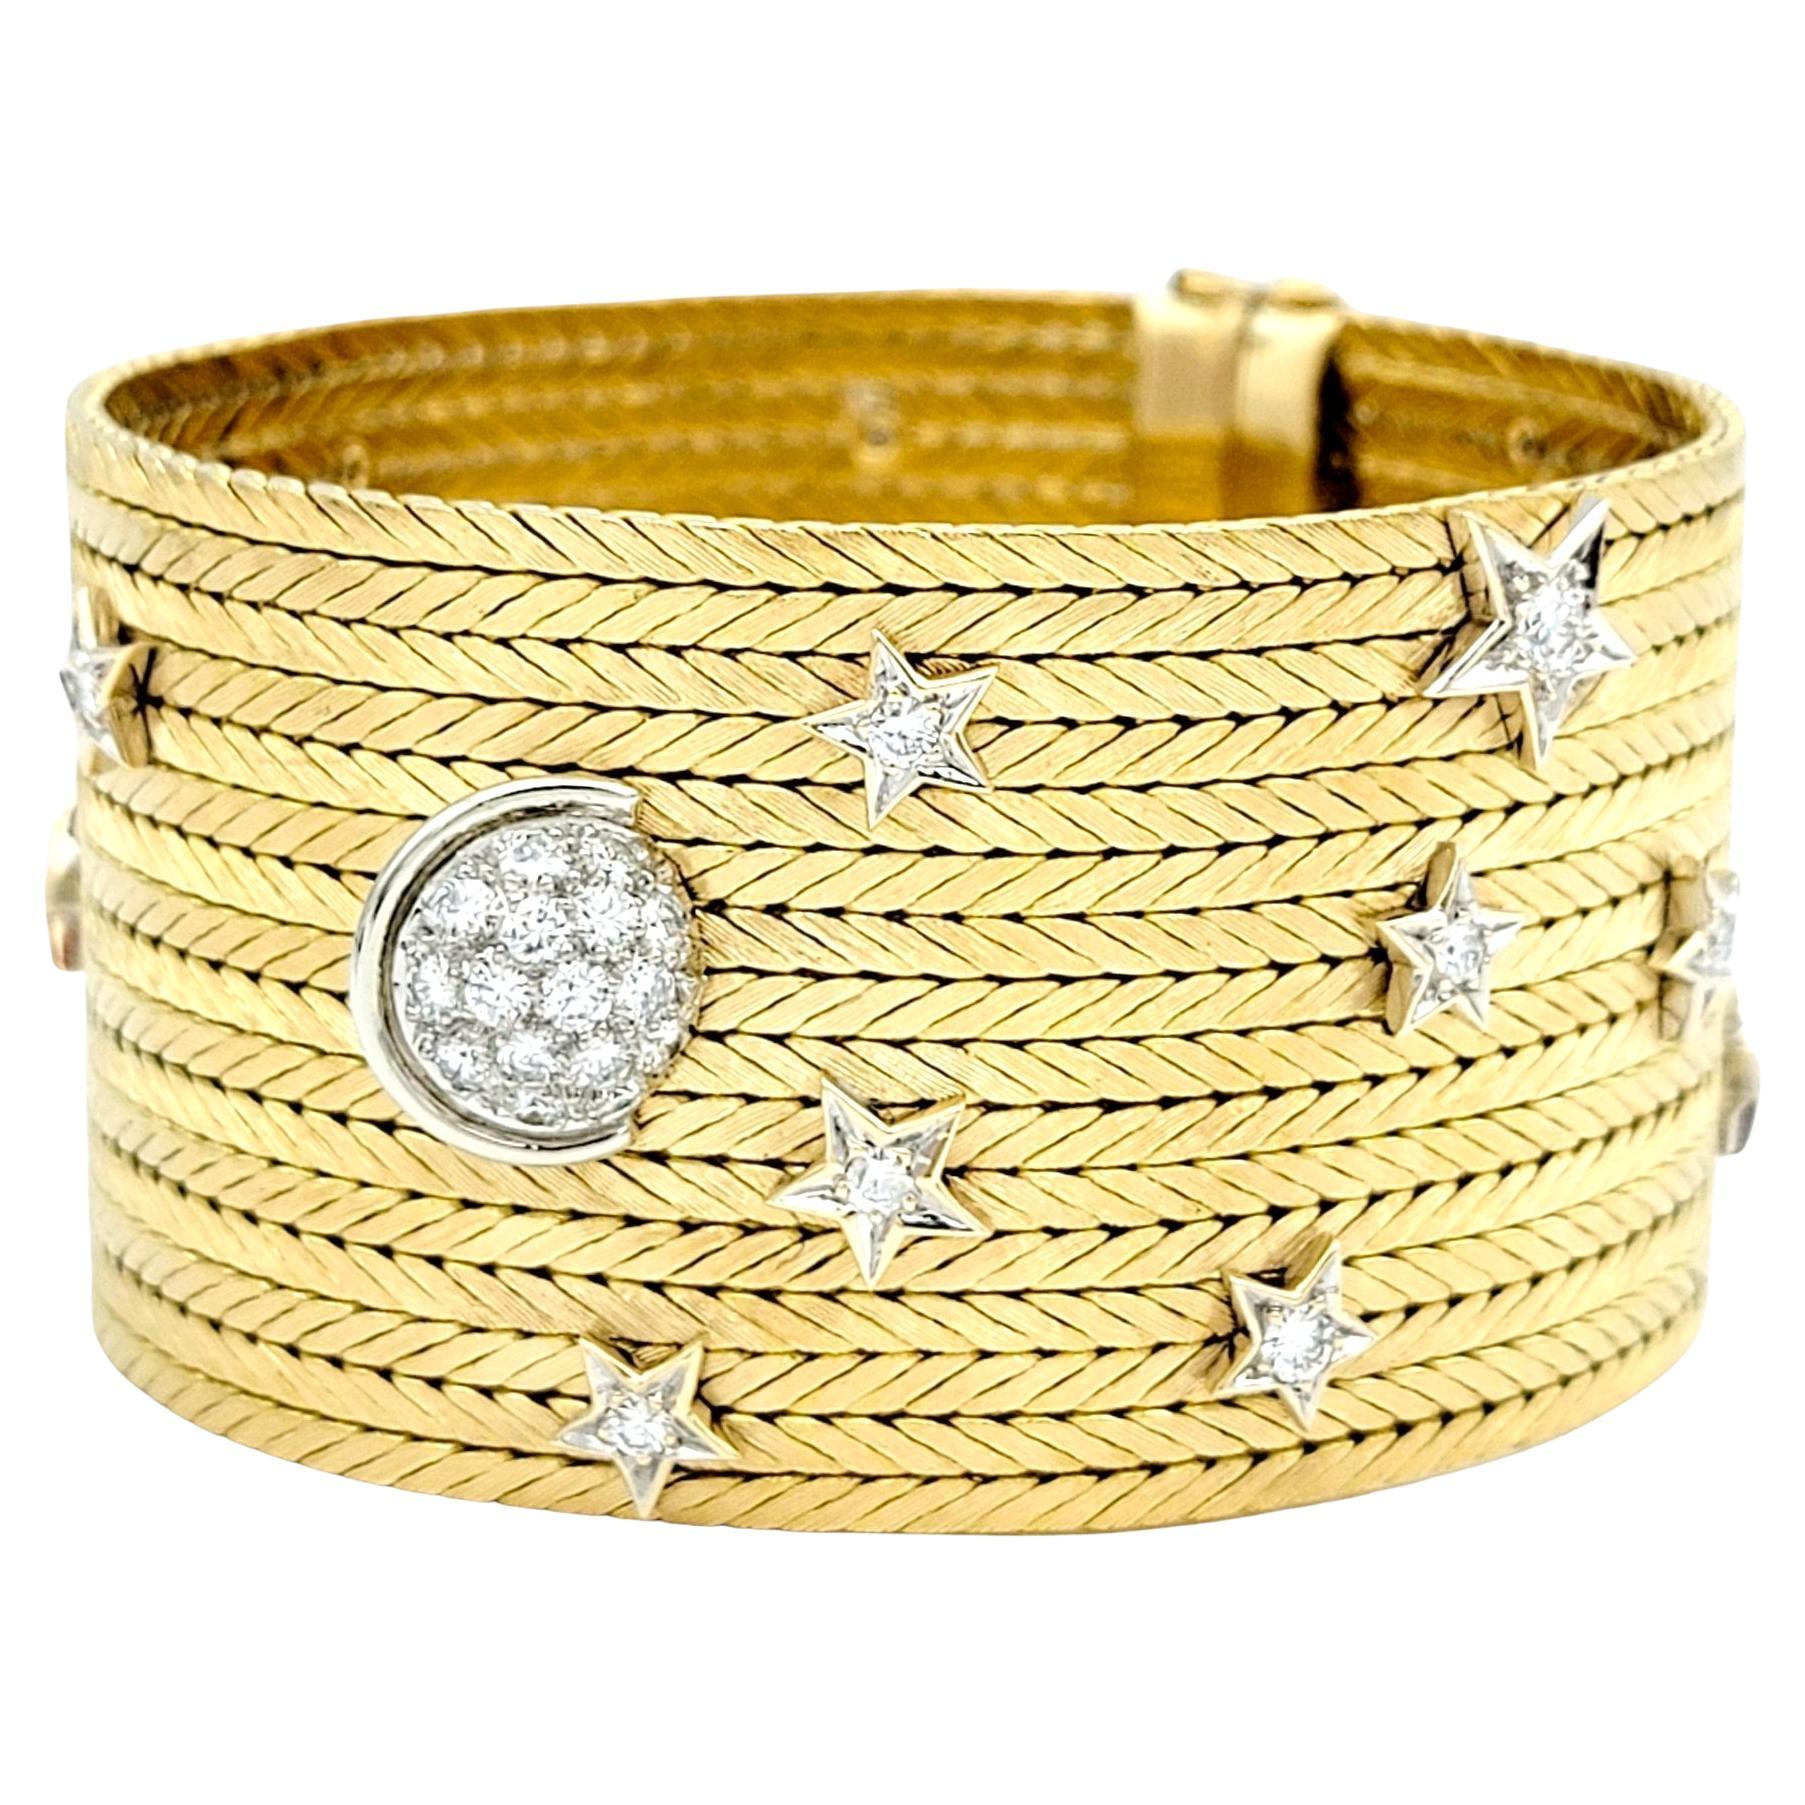 18 Karat Yellow Gold Wide Braided Cuff Bracelet with Diamond Moon & Stars Motif